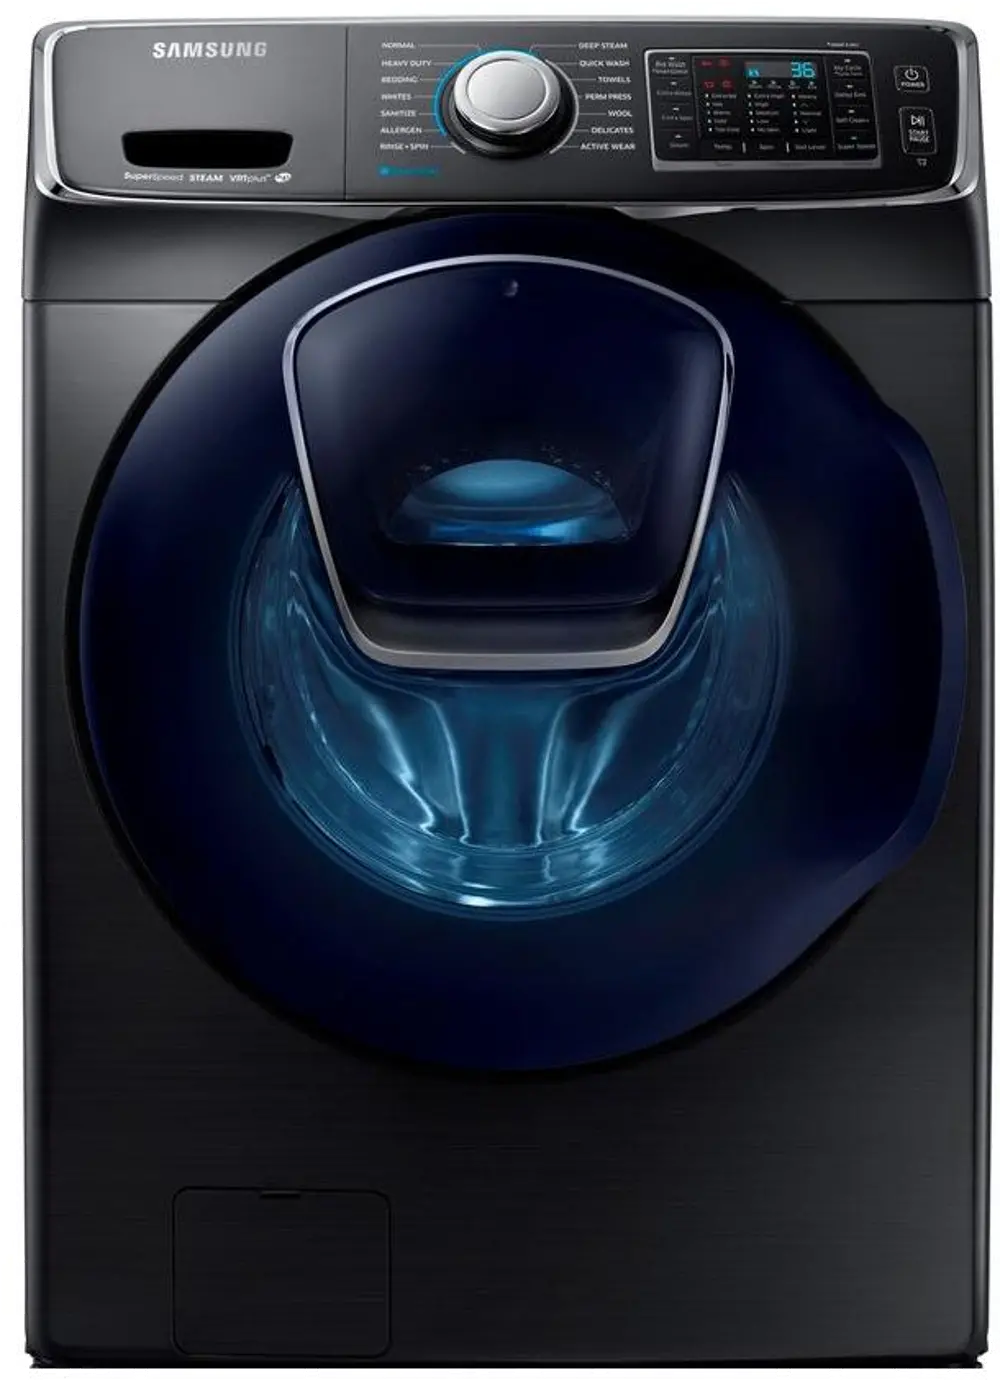 WF50K7500AV Samsung 5.0 cu. ft. Front Load Washer with AddWash - Black Stainless Steel-1